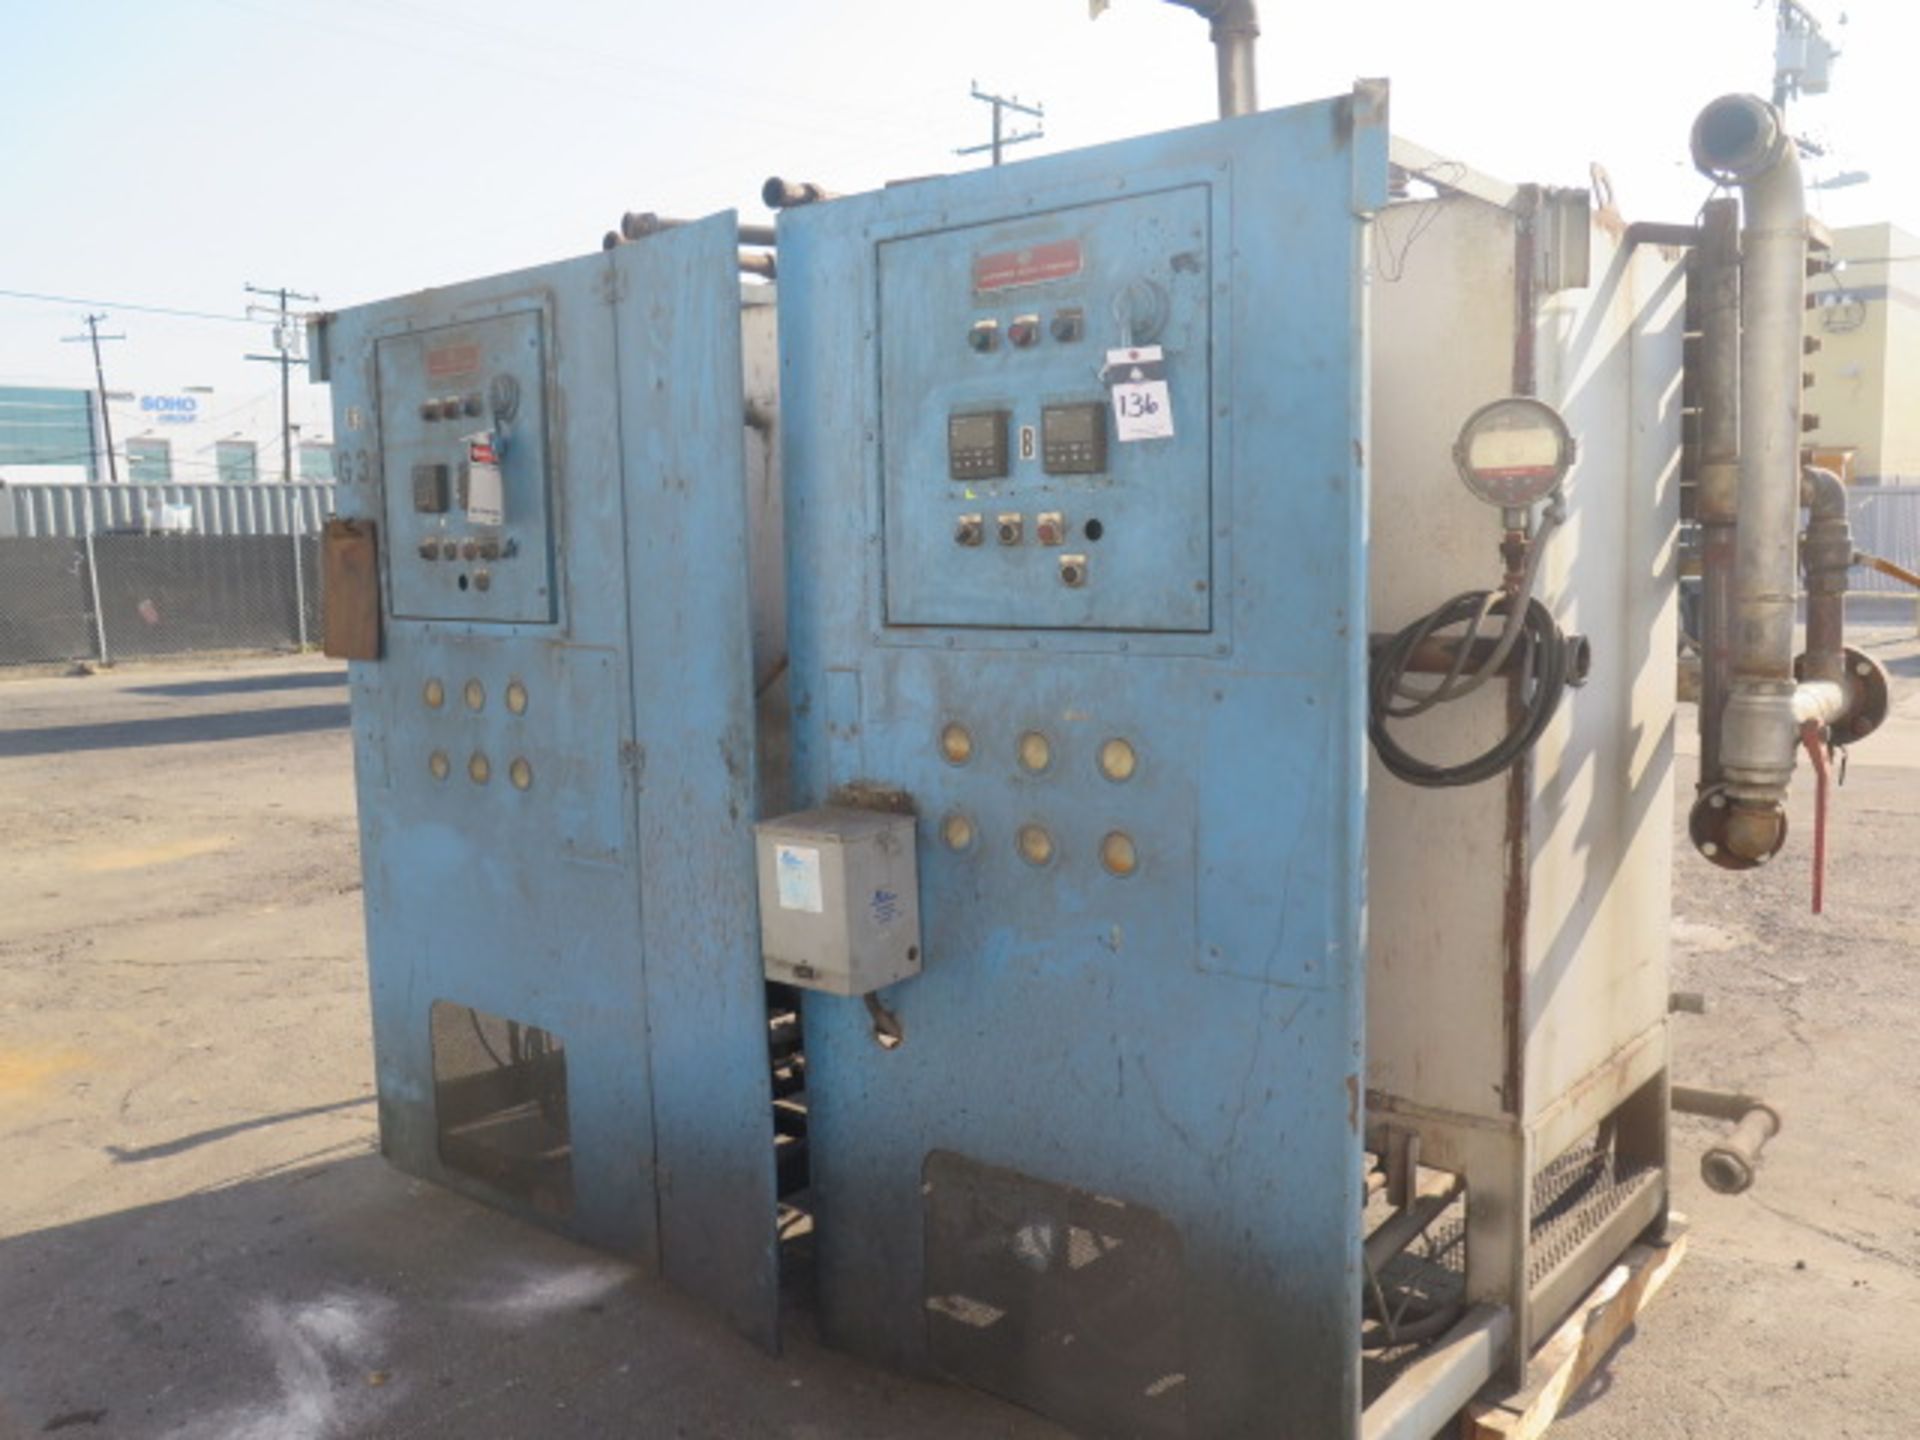 Caliform Alloy Co. “Hyen Generator” Exothermic Atmosphere Generator (For Furnaces) w/ Waukee Mixor - Image 2 of 11